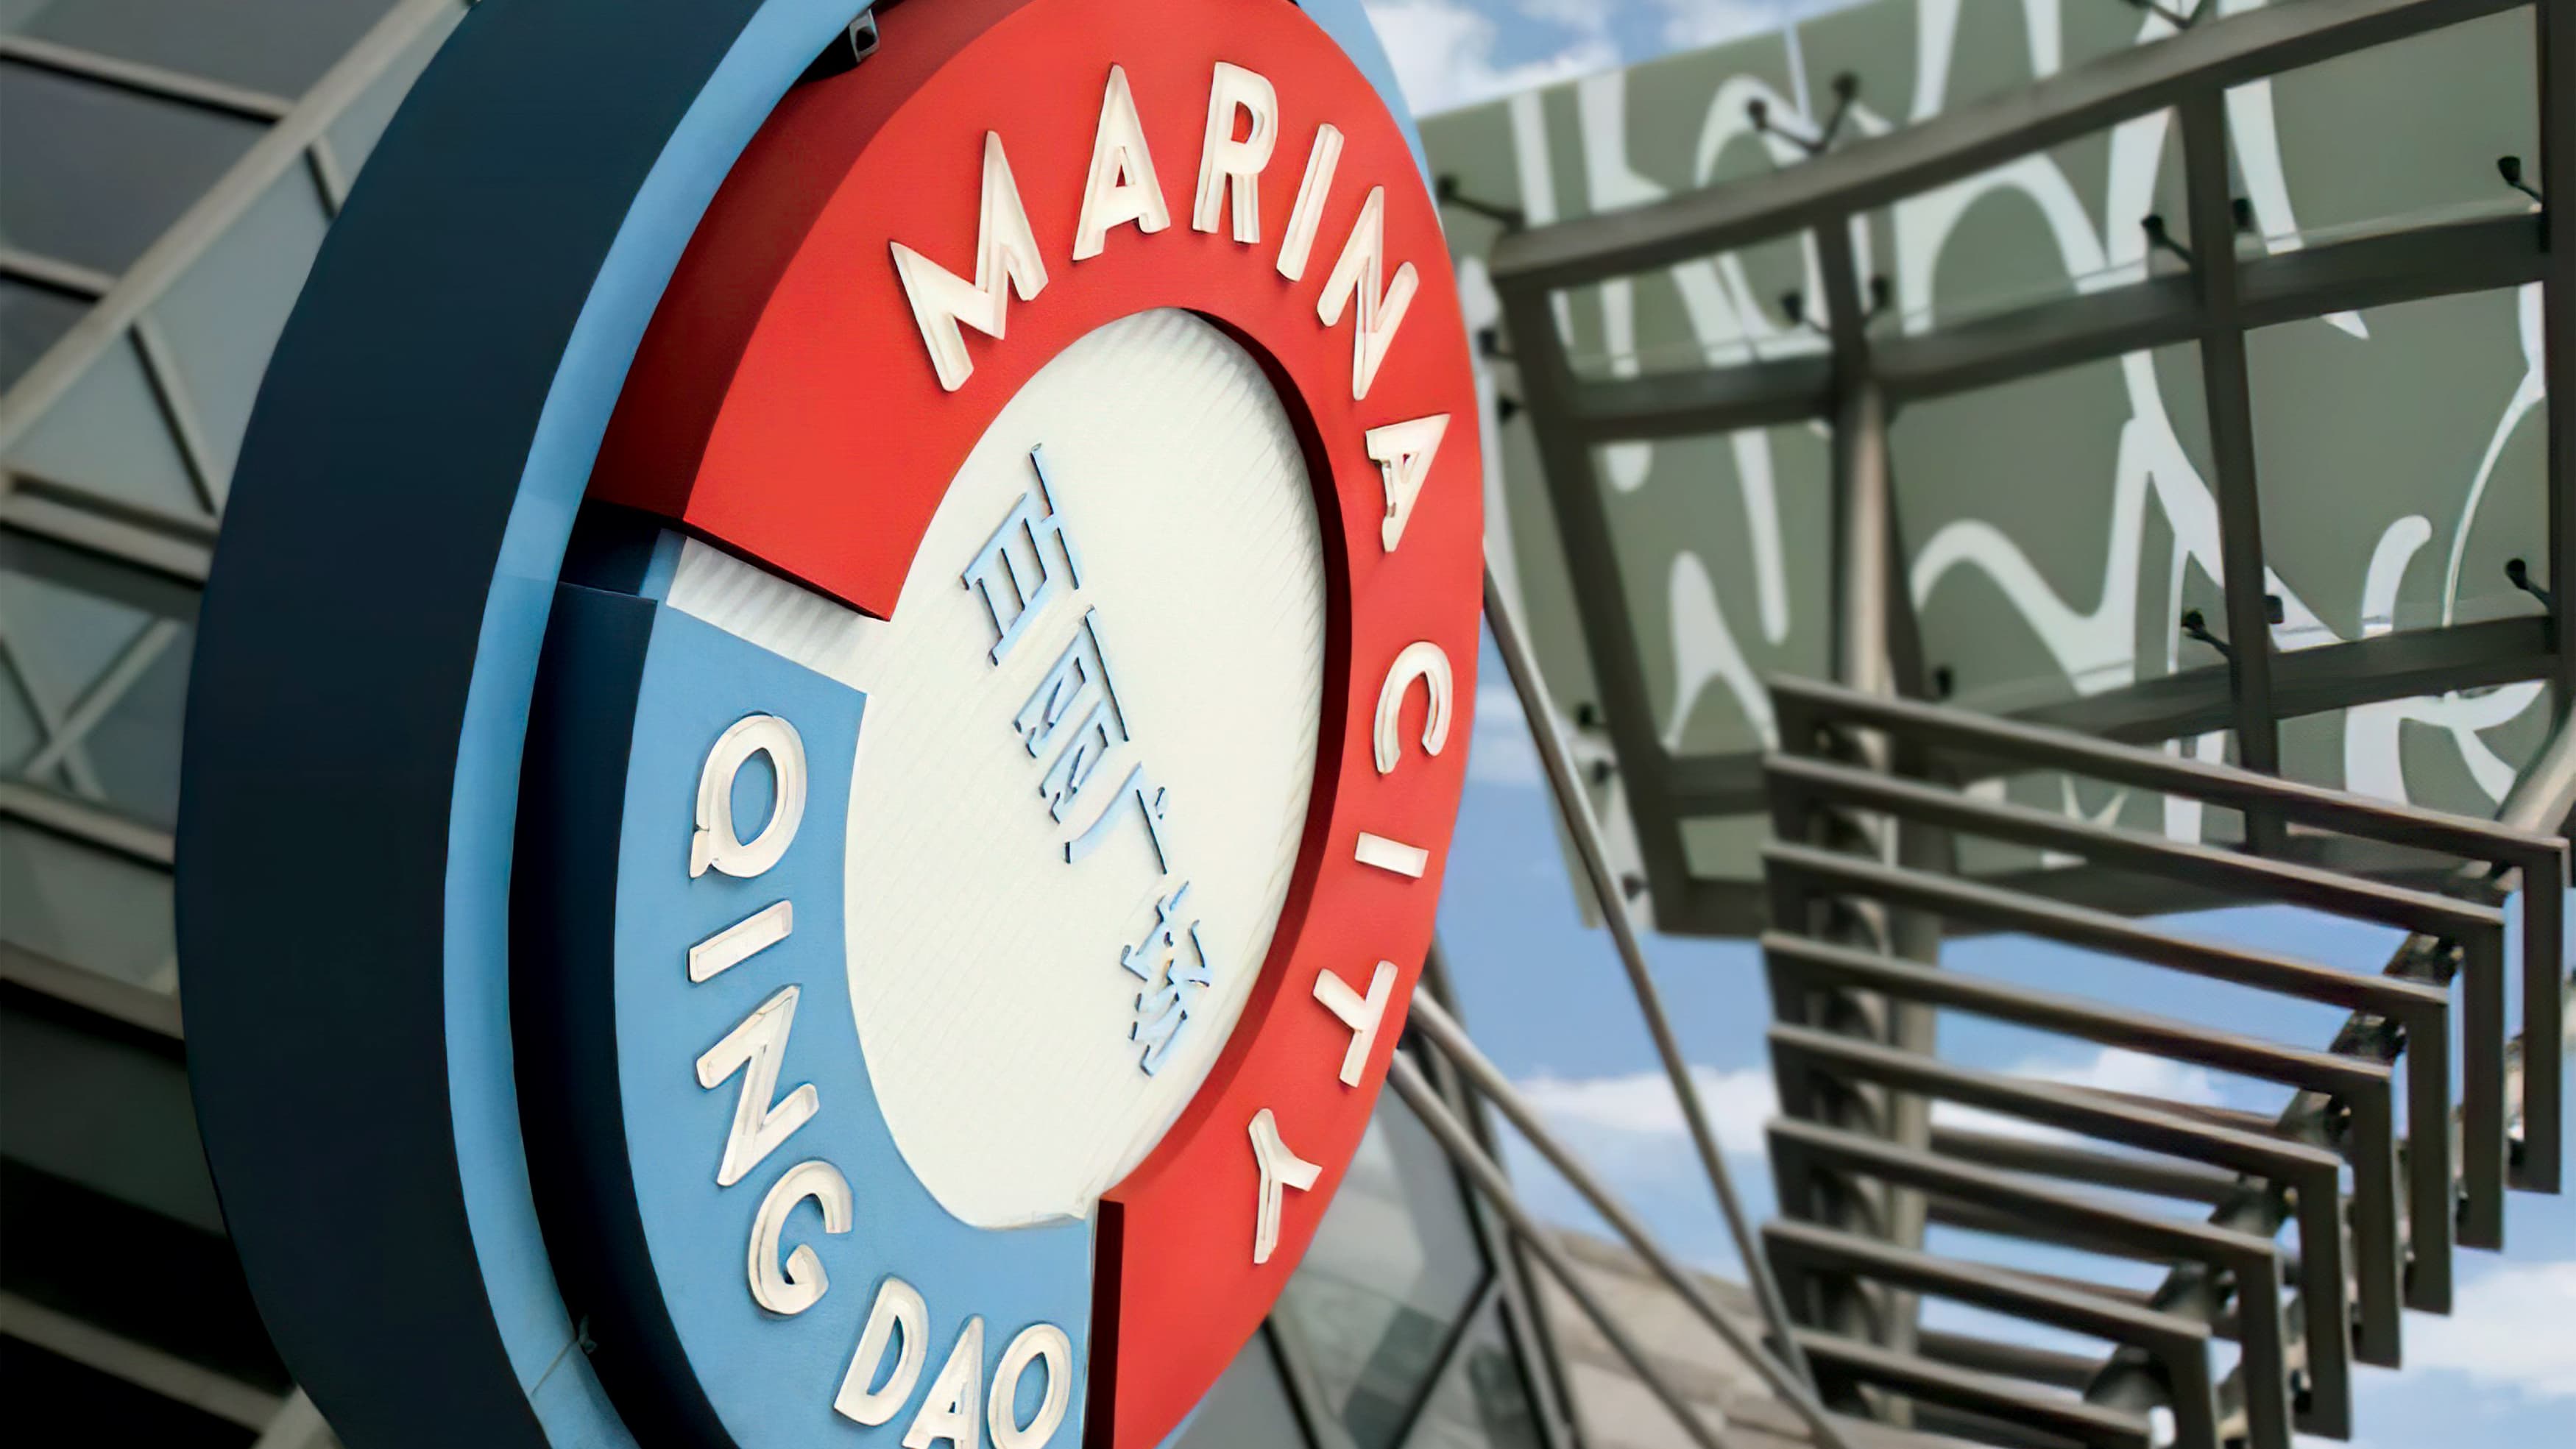 Marina City project identity on sign fashioned to look like buoy